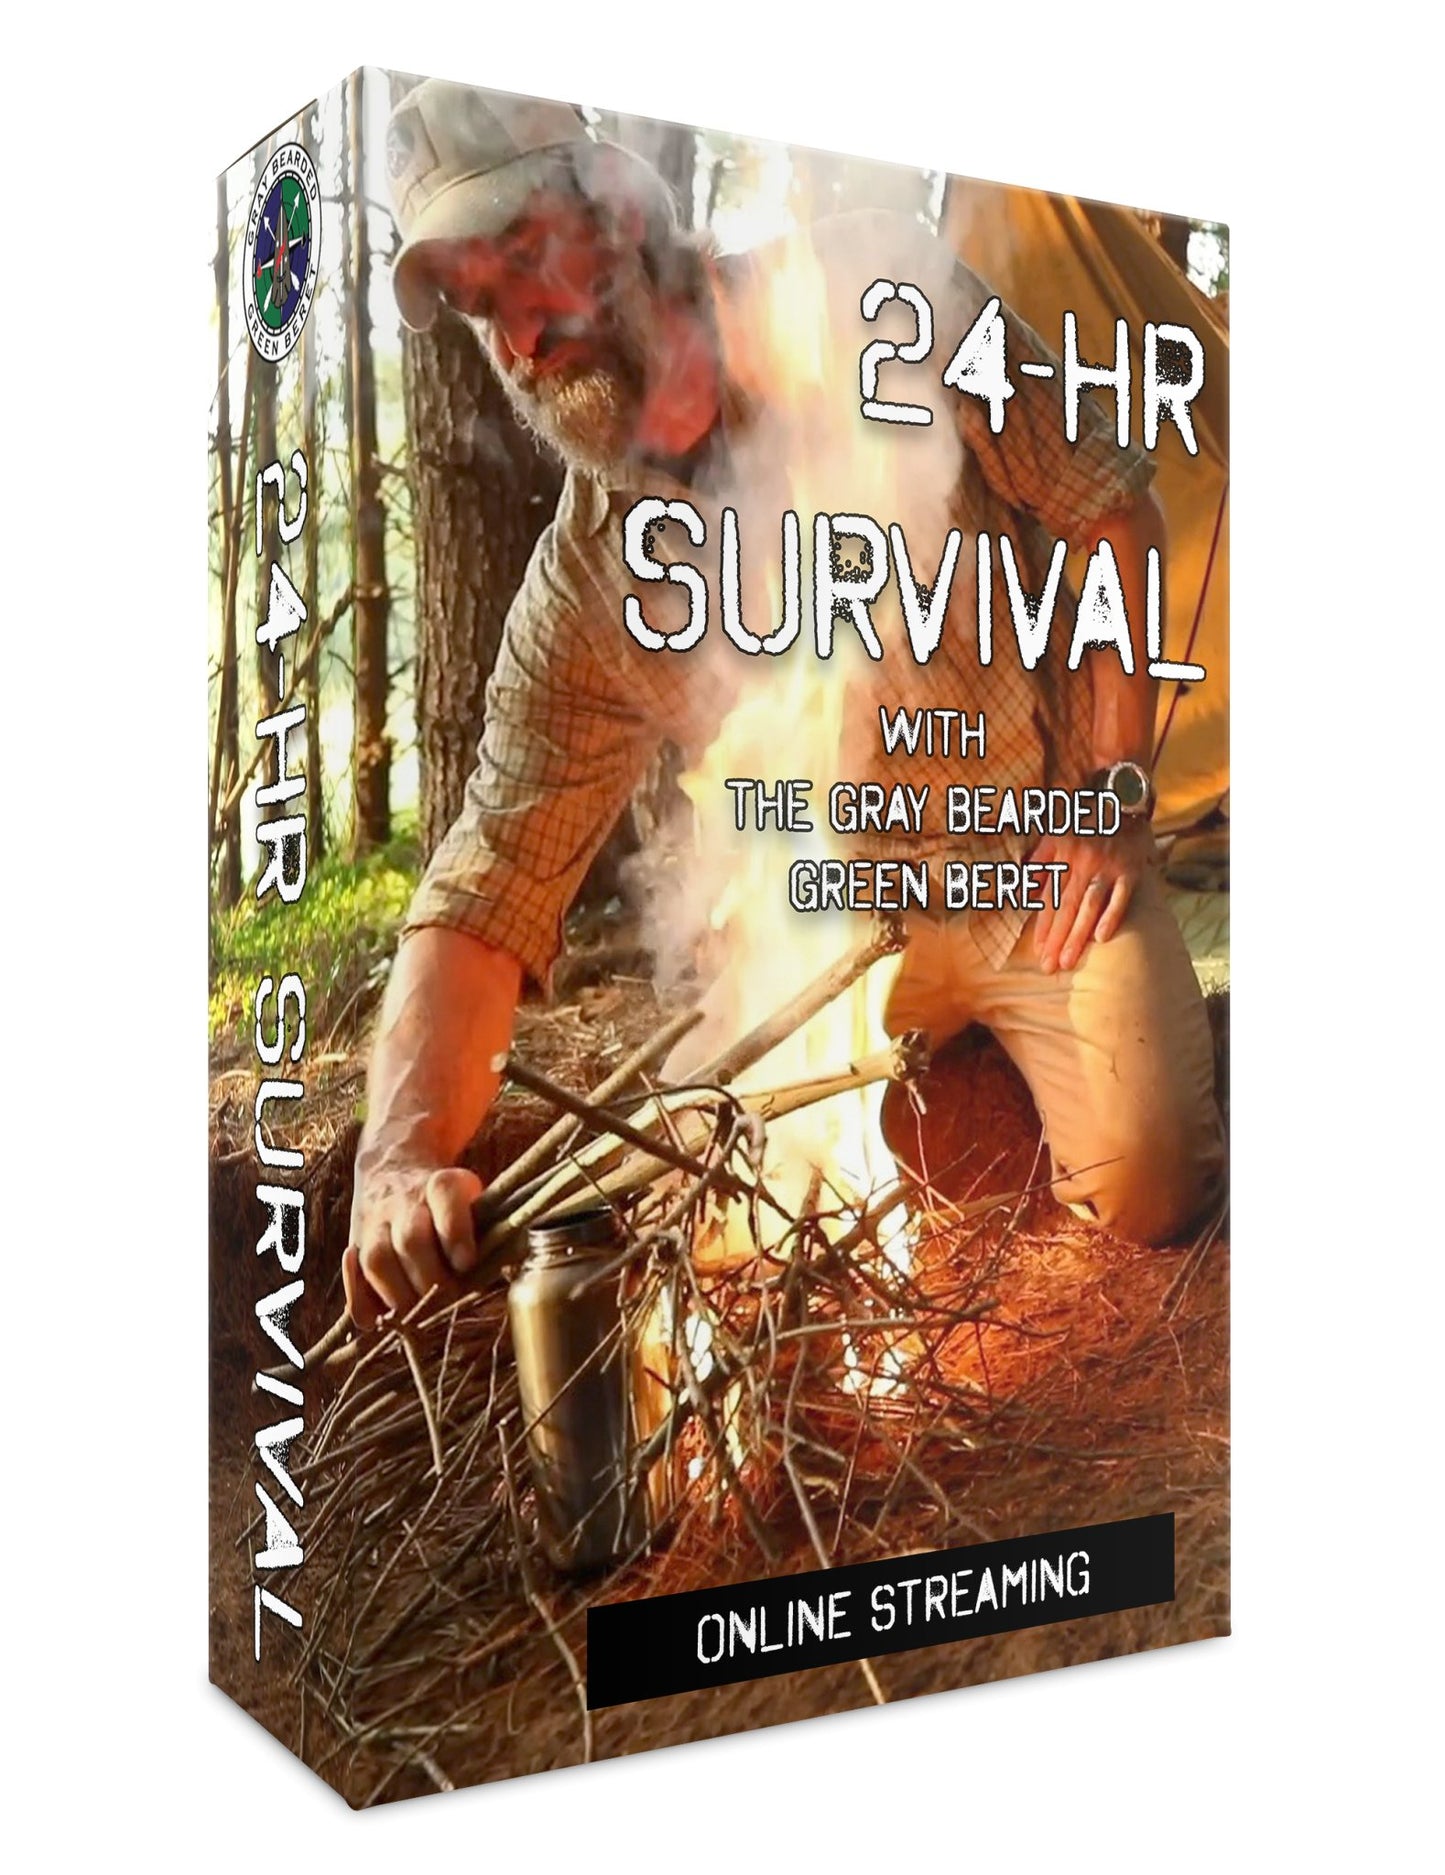 24-hr Survival (Online Streaming) - Gray Bearded Green Beret